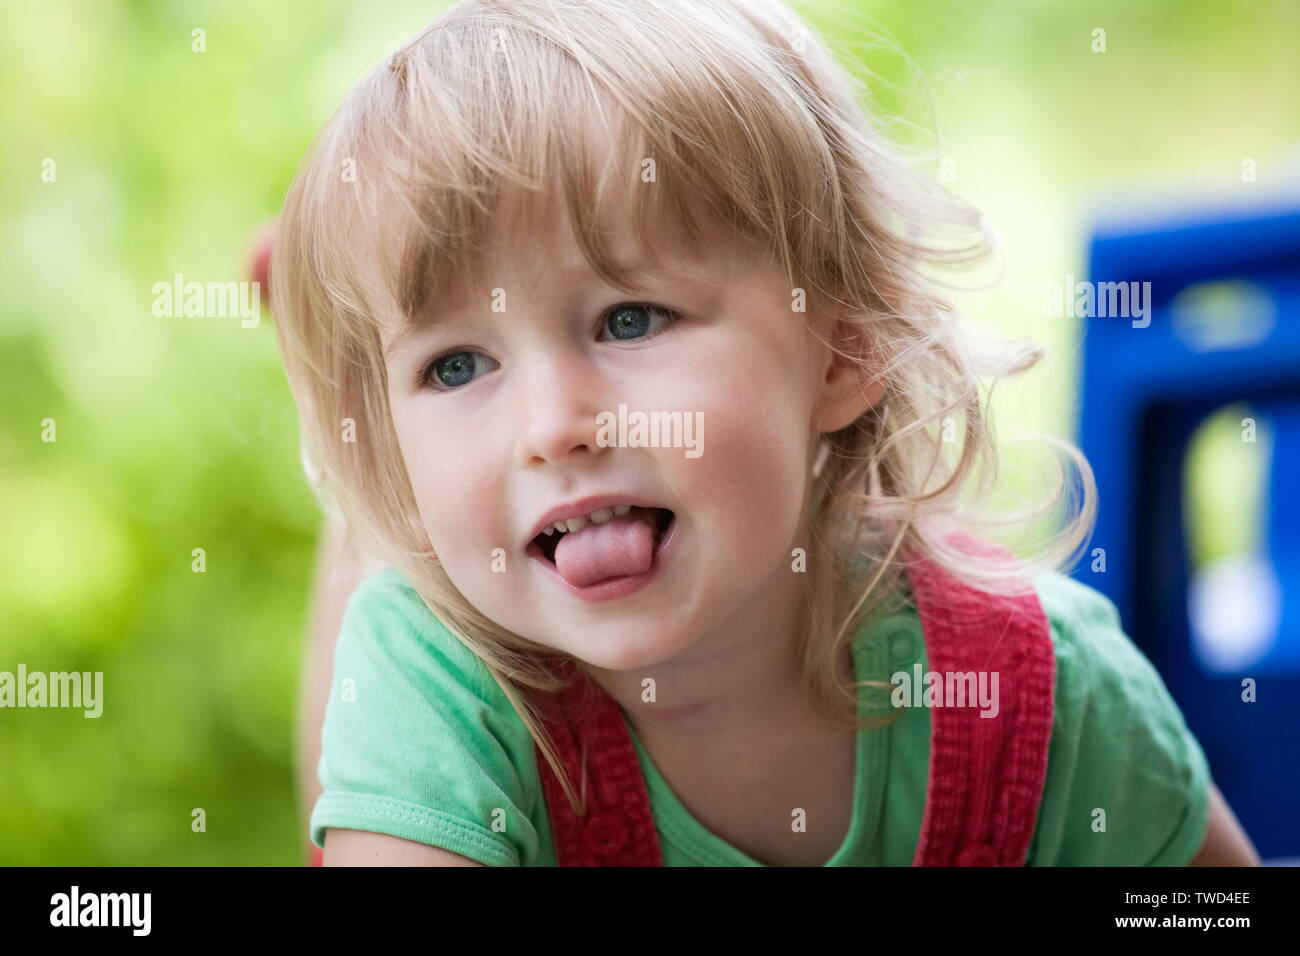 little child caucasian girl face closeup on green summer outdoor background Stock Photo